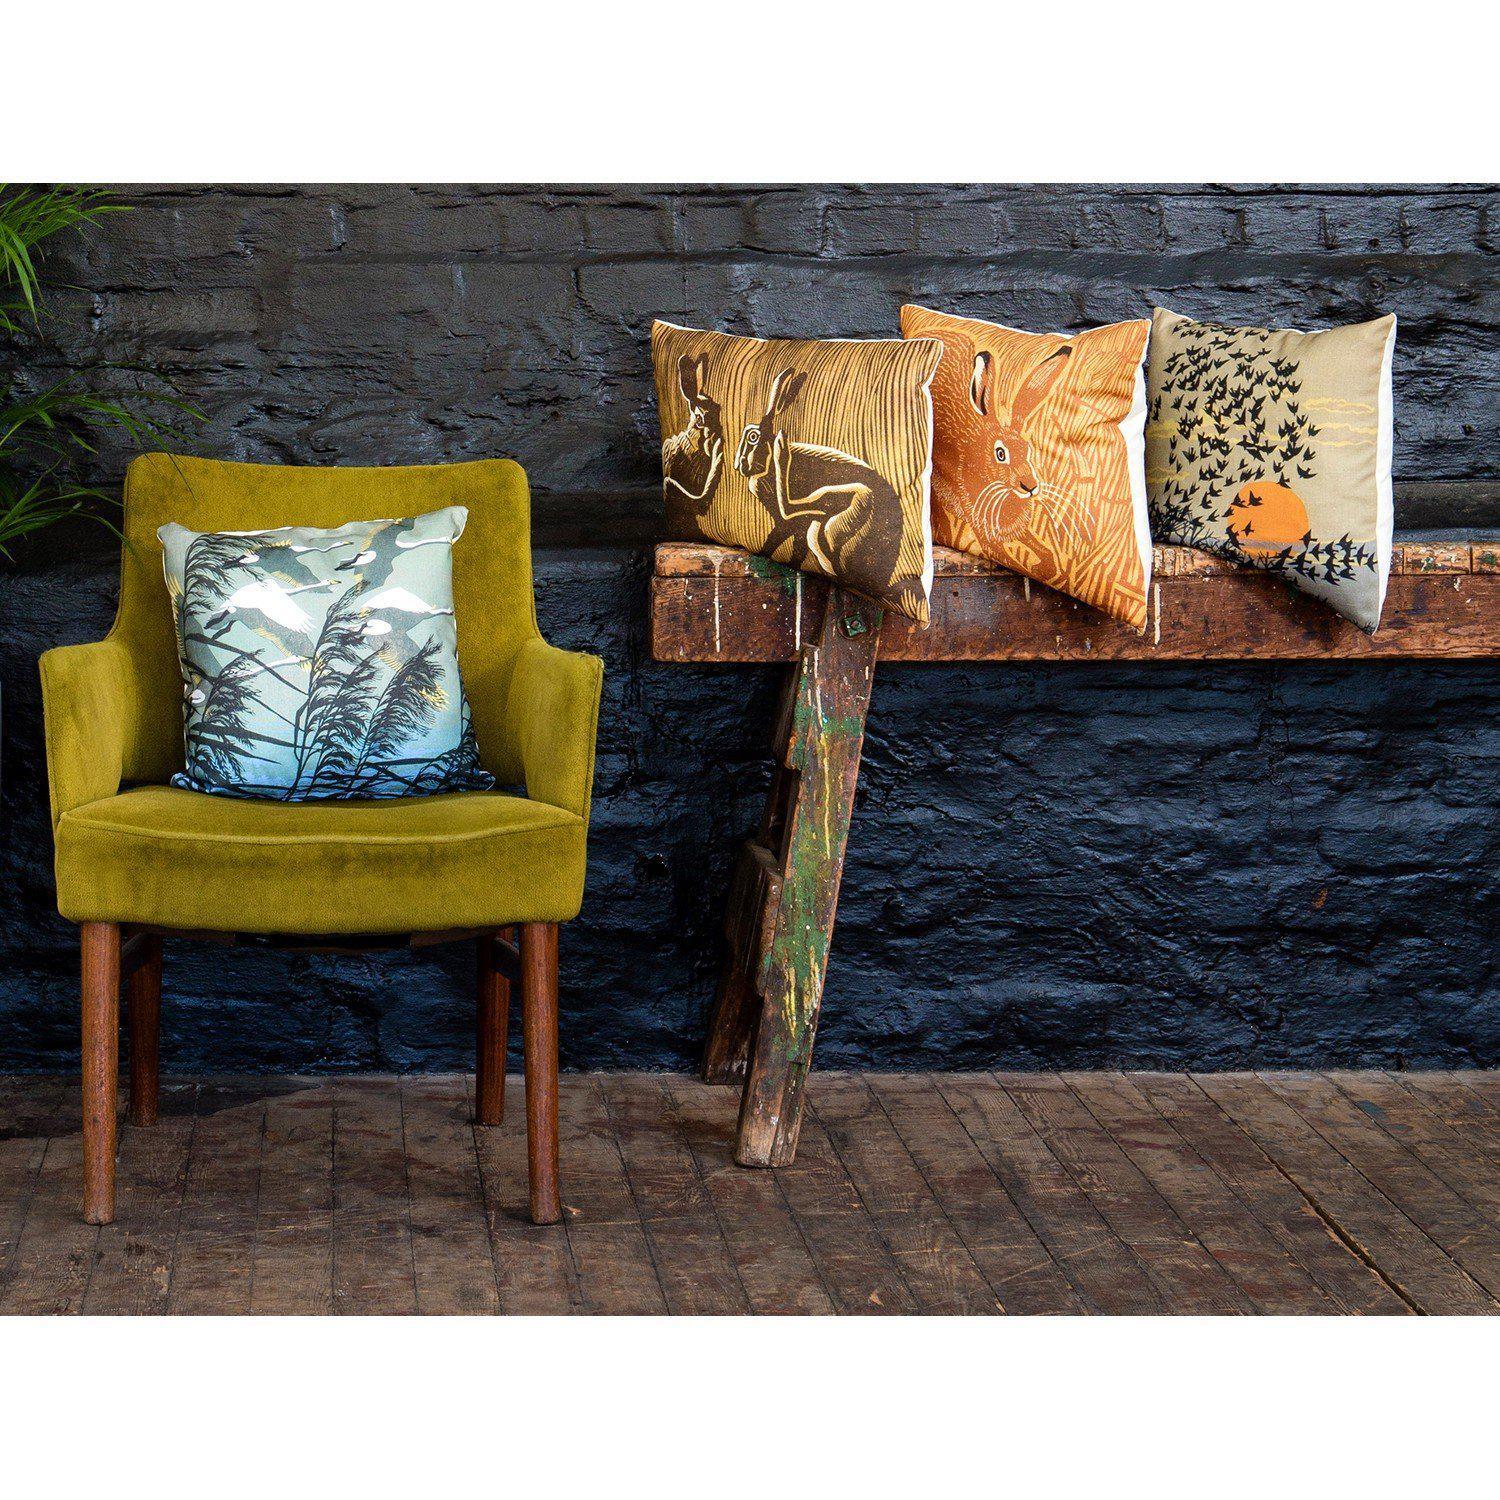 Four Eider Duckls - Robert Gillmor Cushion - Handmade Cushions UK - WeLoveCushions